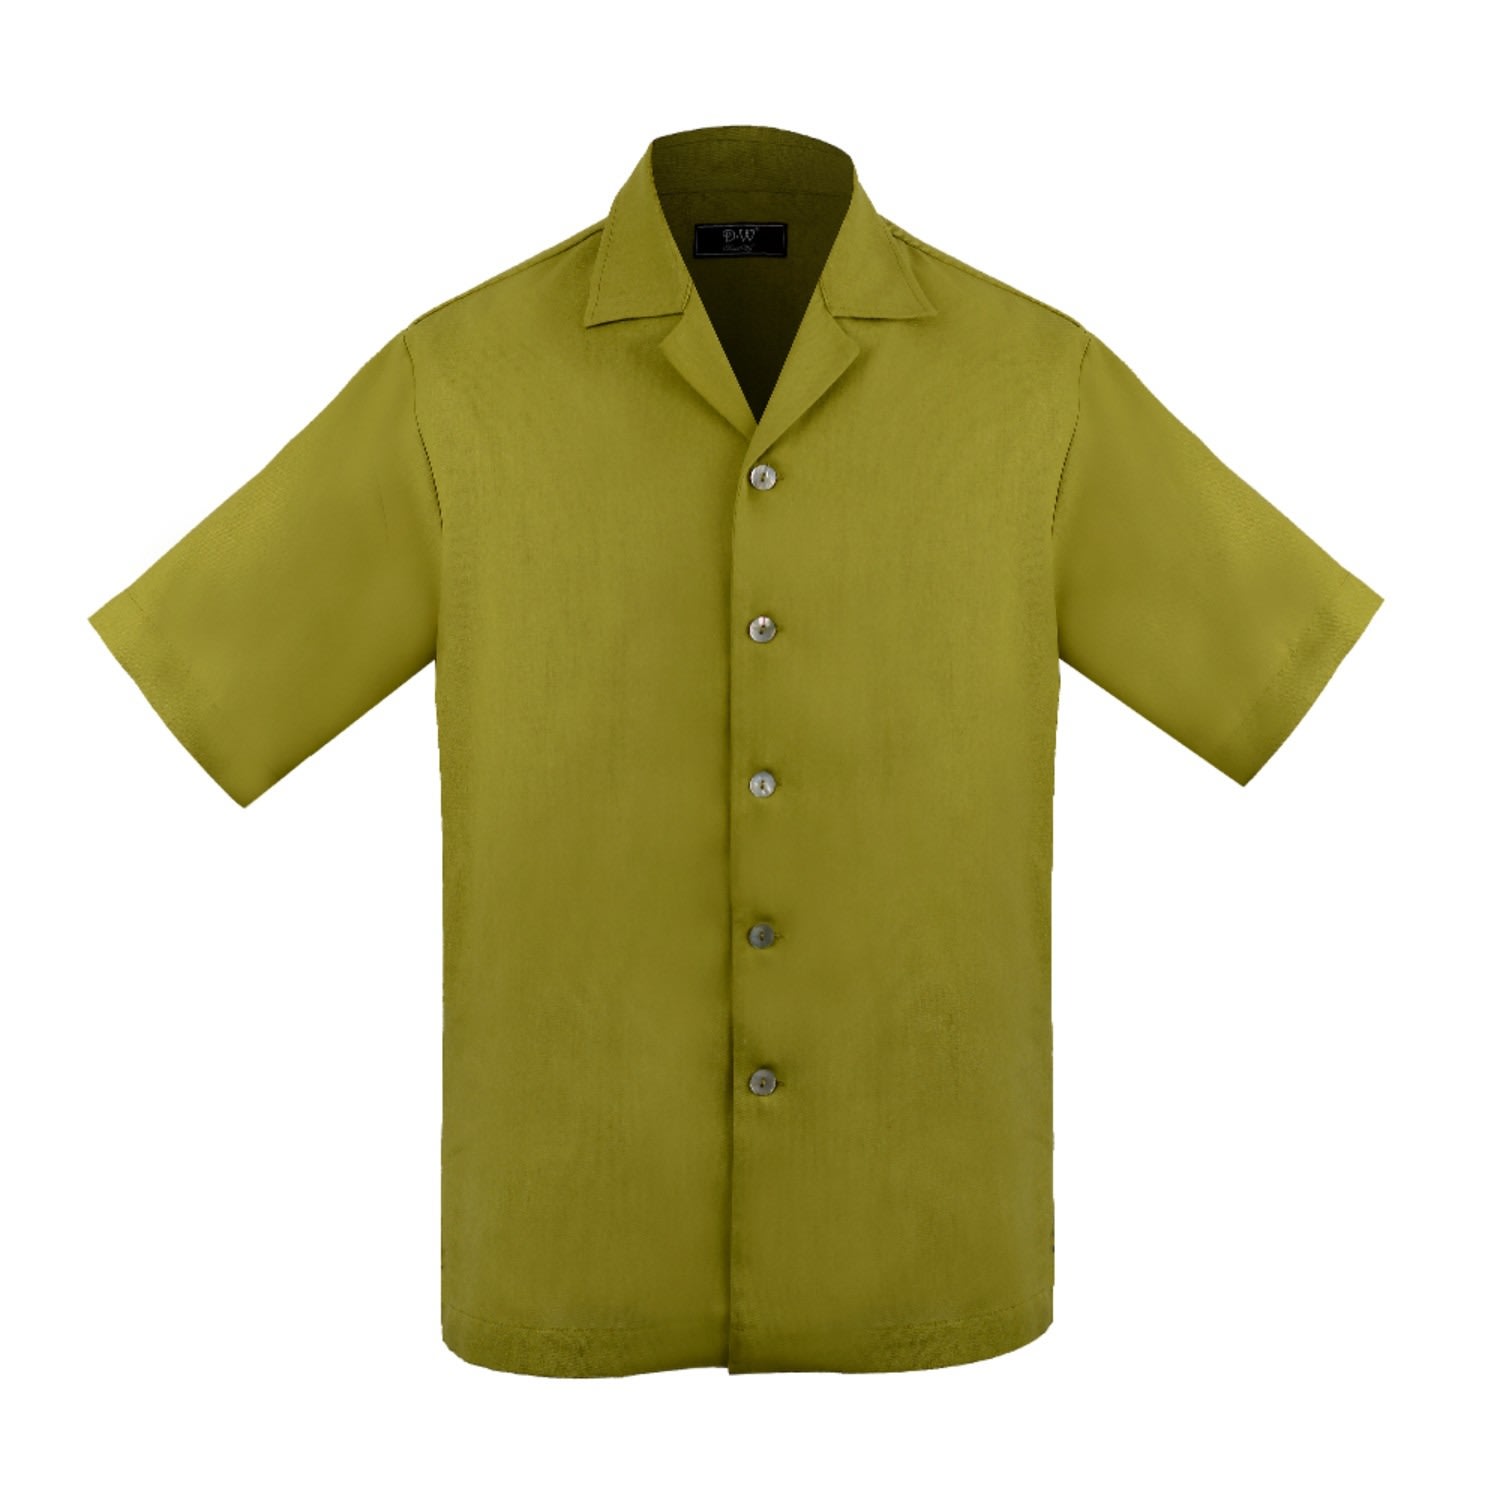 Men's Kingston Linen Blend Shirt - Olive Green Small DAVID WEJ